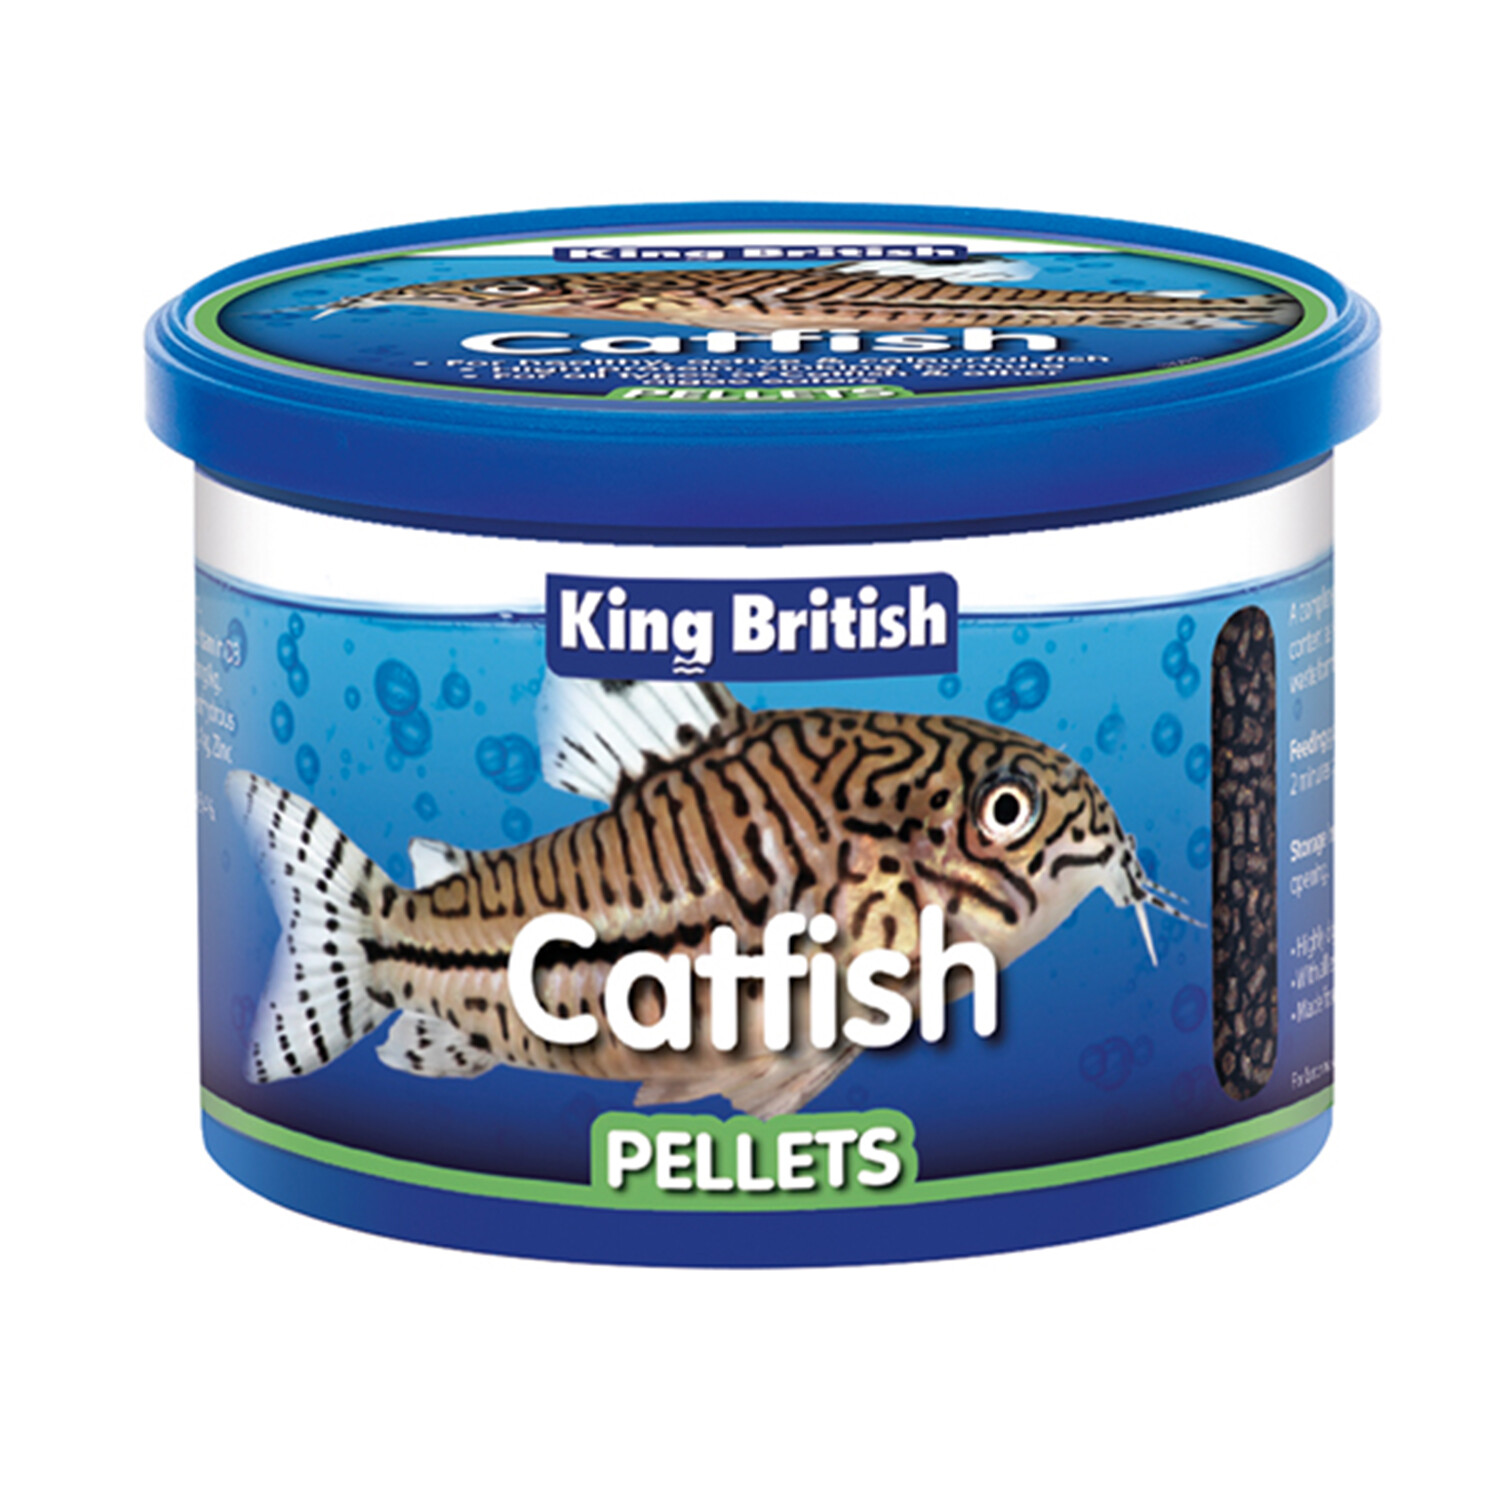 King British Catfish Pellets 200g Image